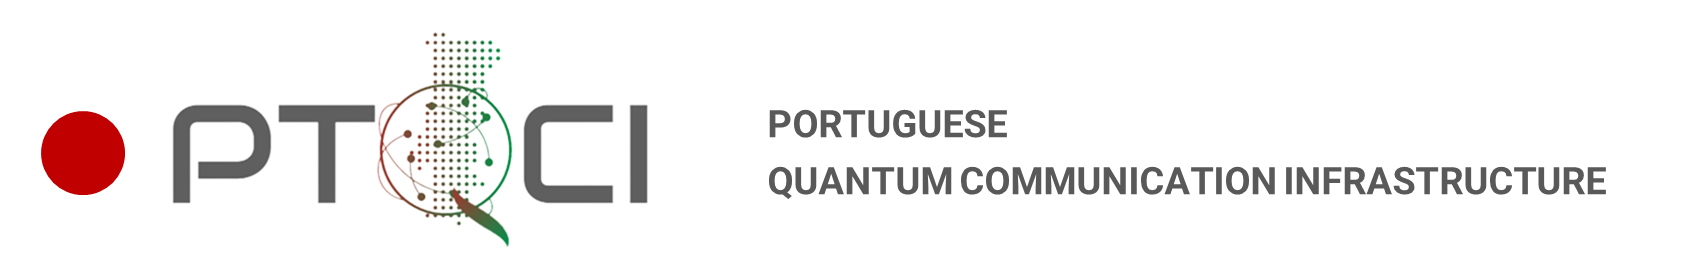 Portuguese Quantum Communication Infrastructure (PTQCI)